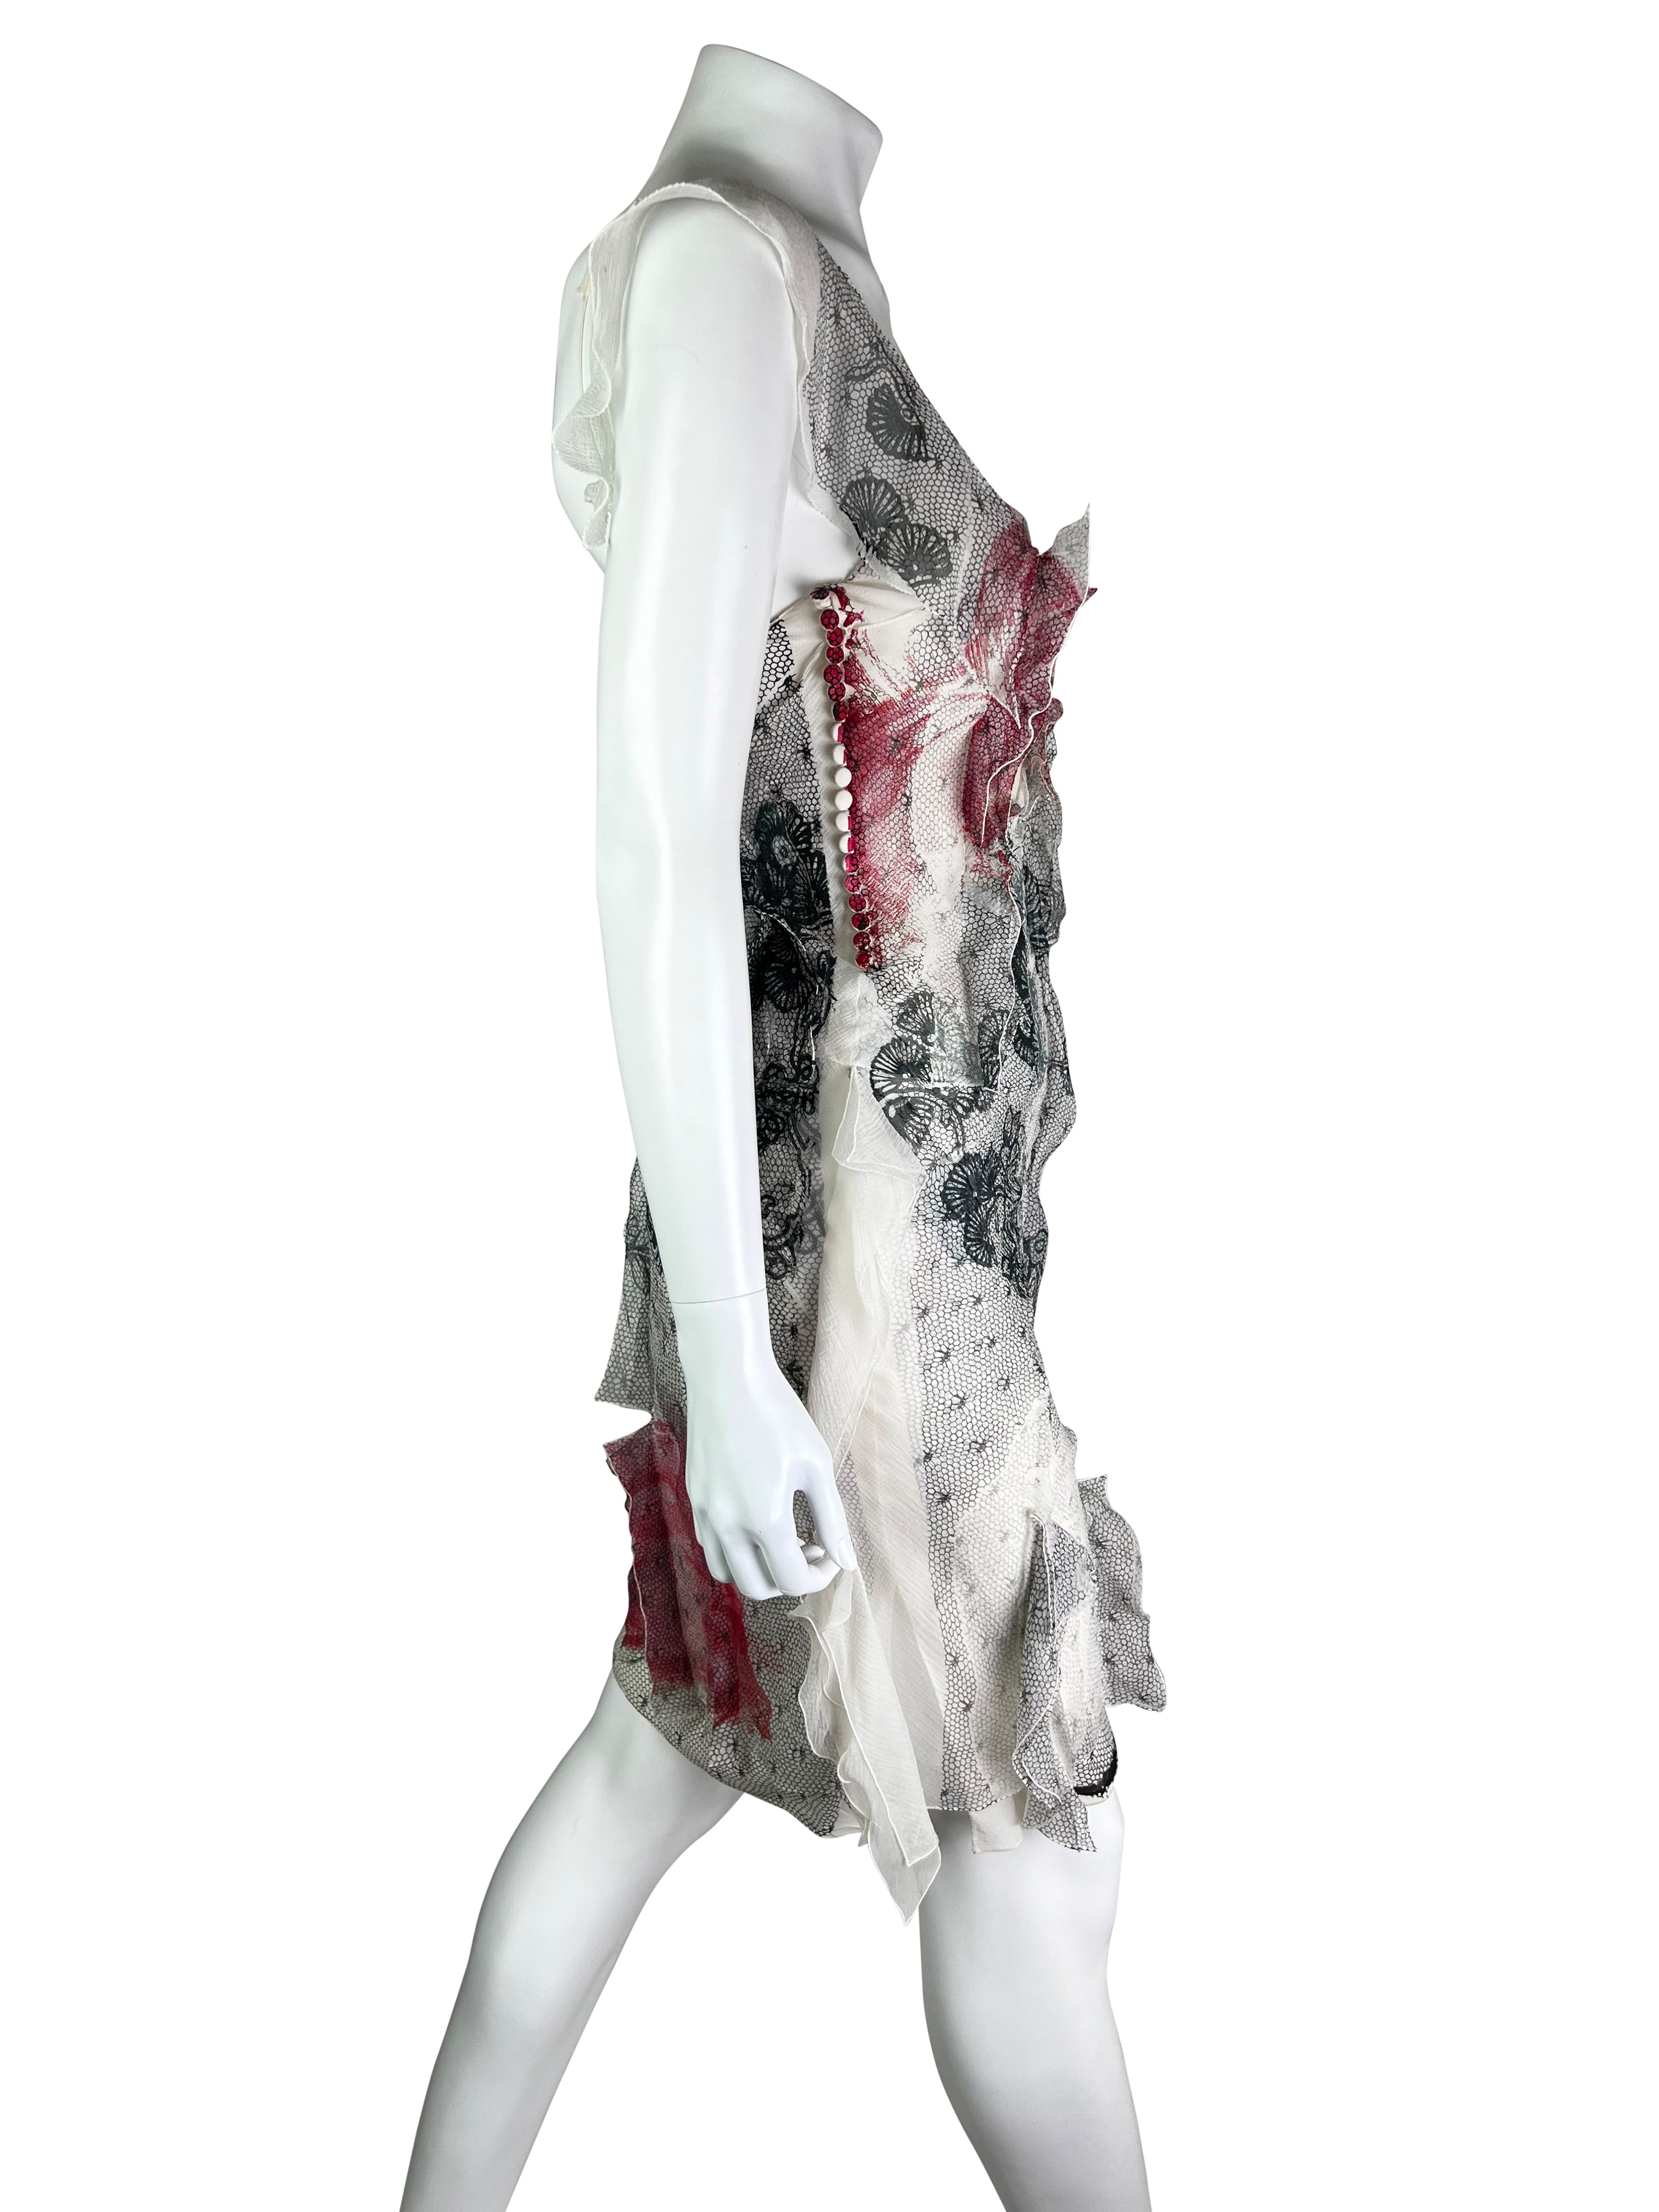 Dior by John Galliano Spring 2006 Silk Dress